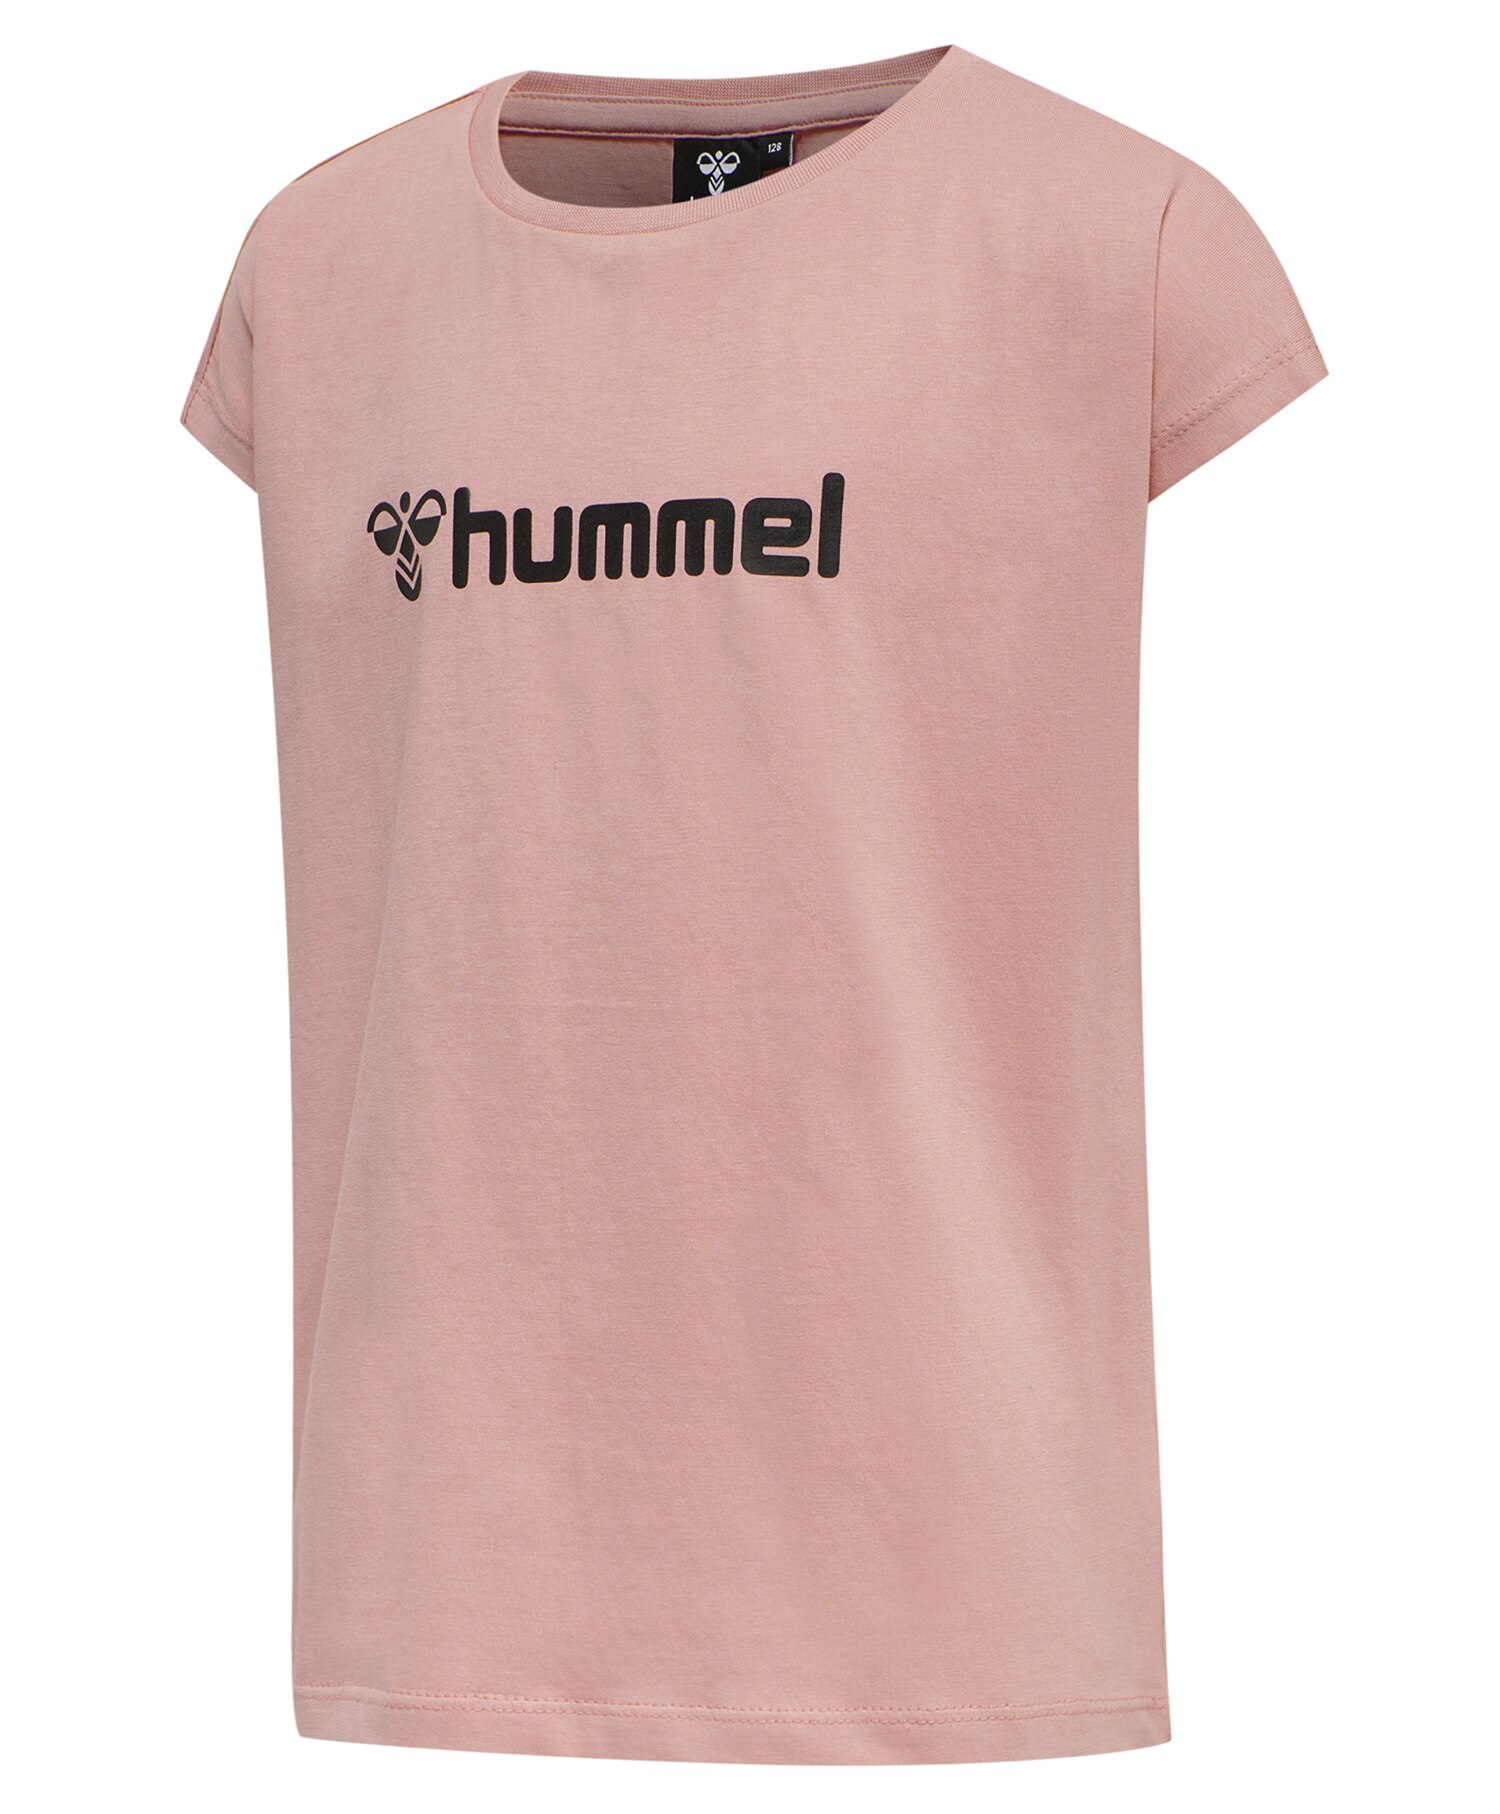 Hummel NOVA shorts set